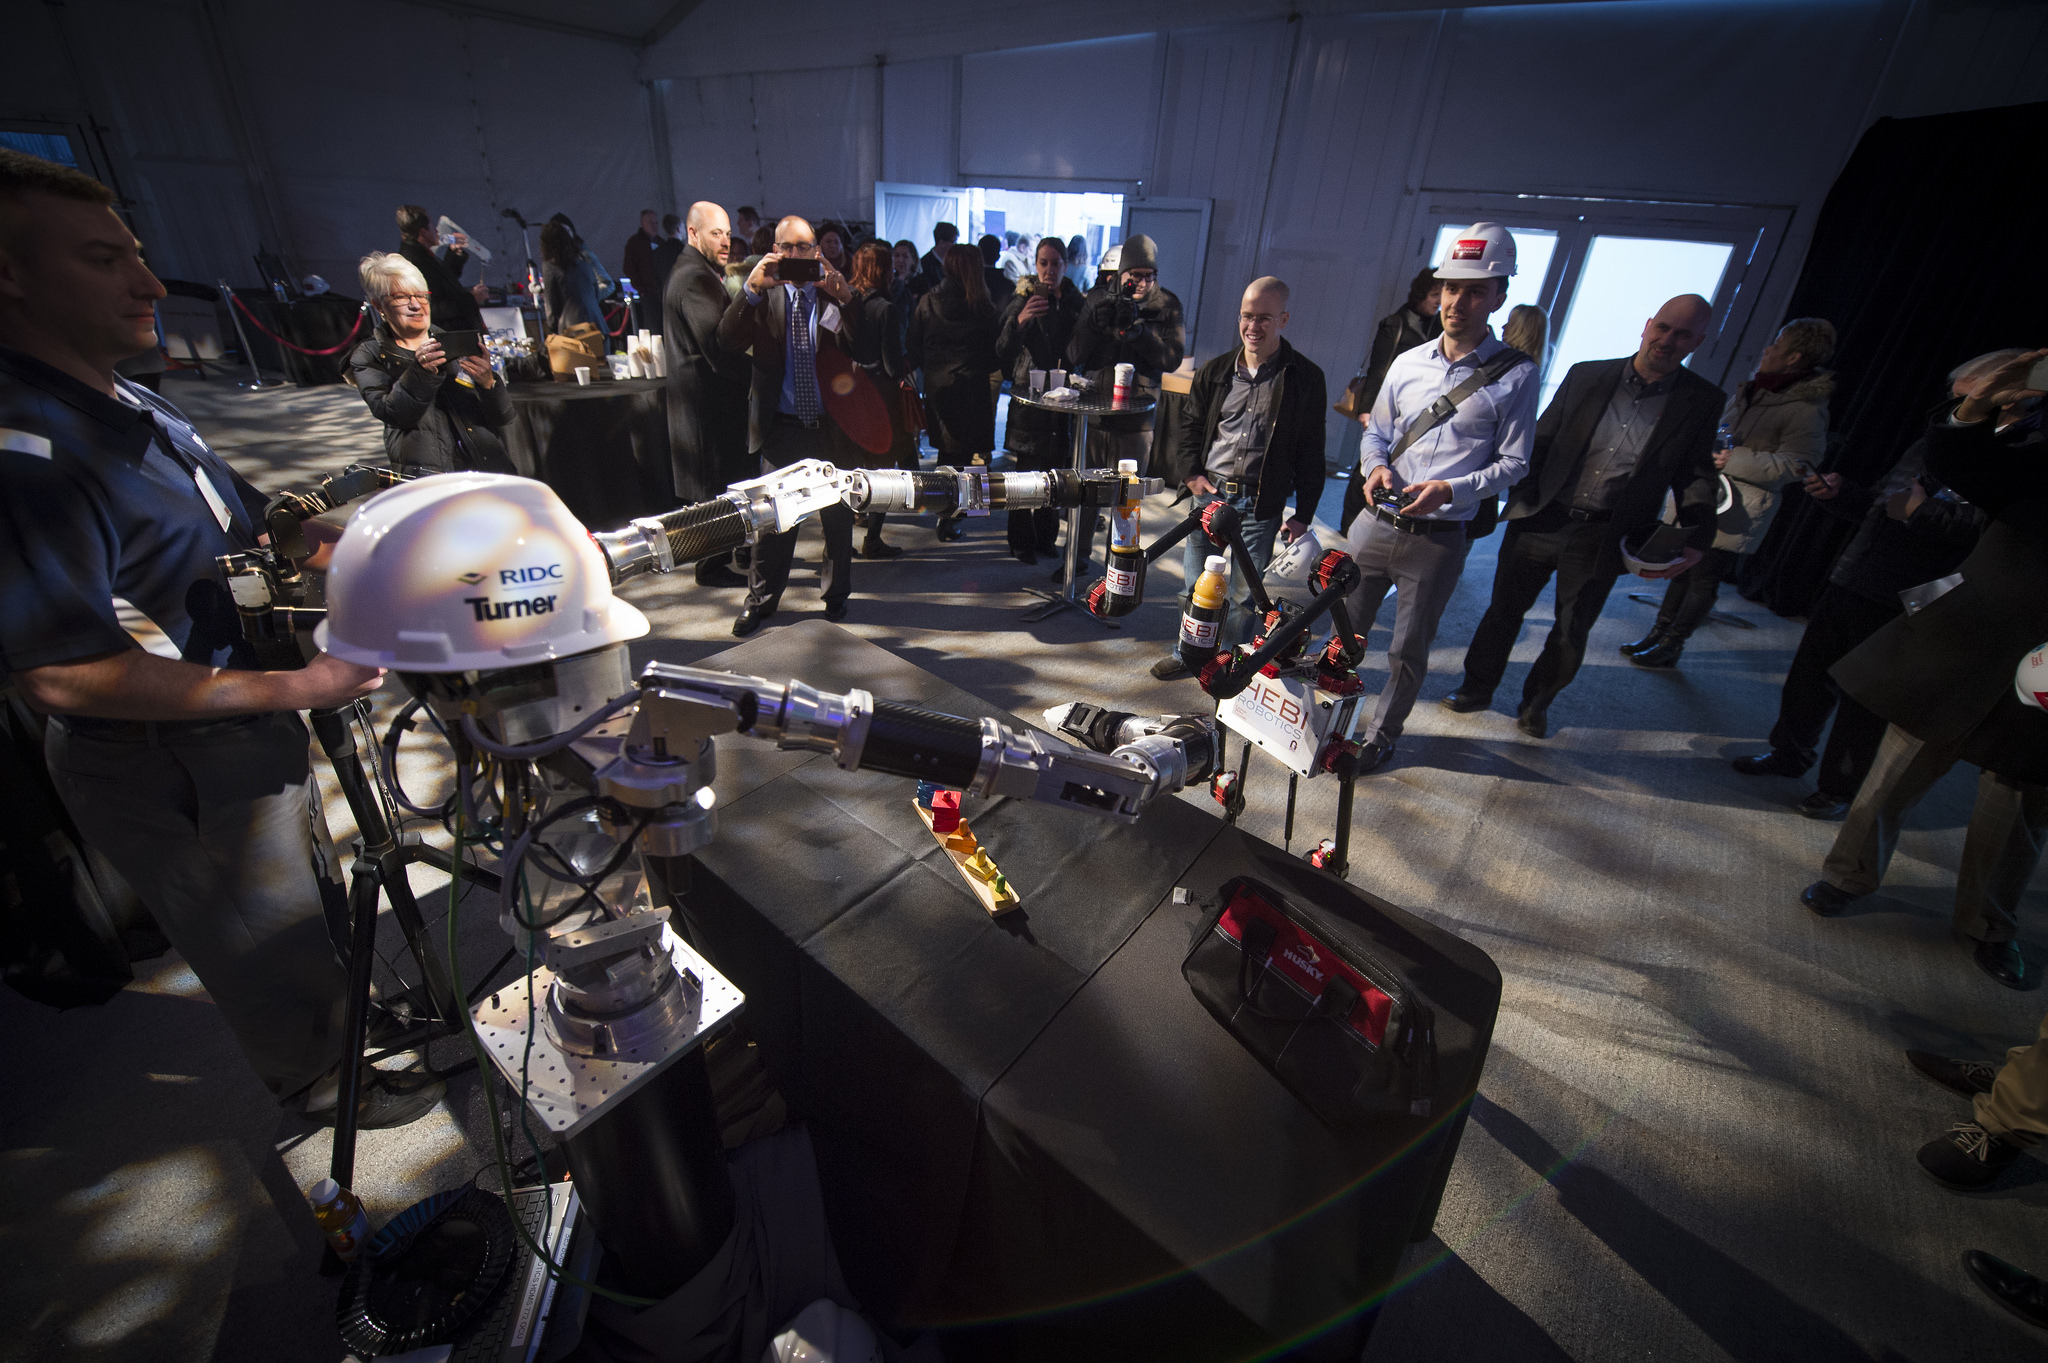 robotics demo at the groundbreaking event